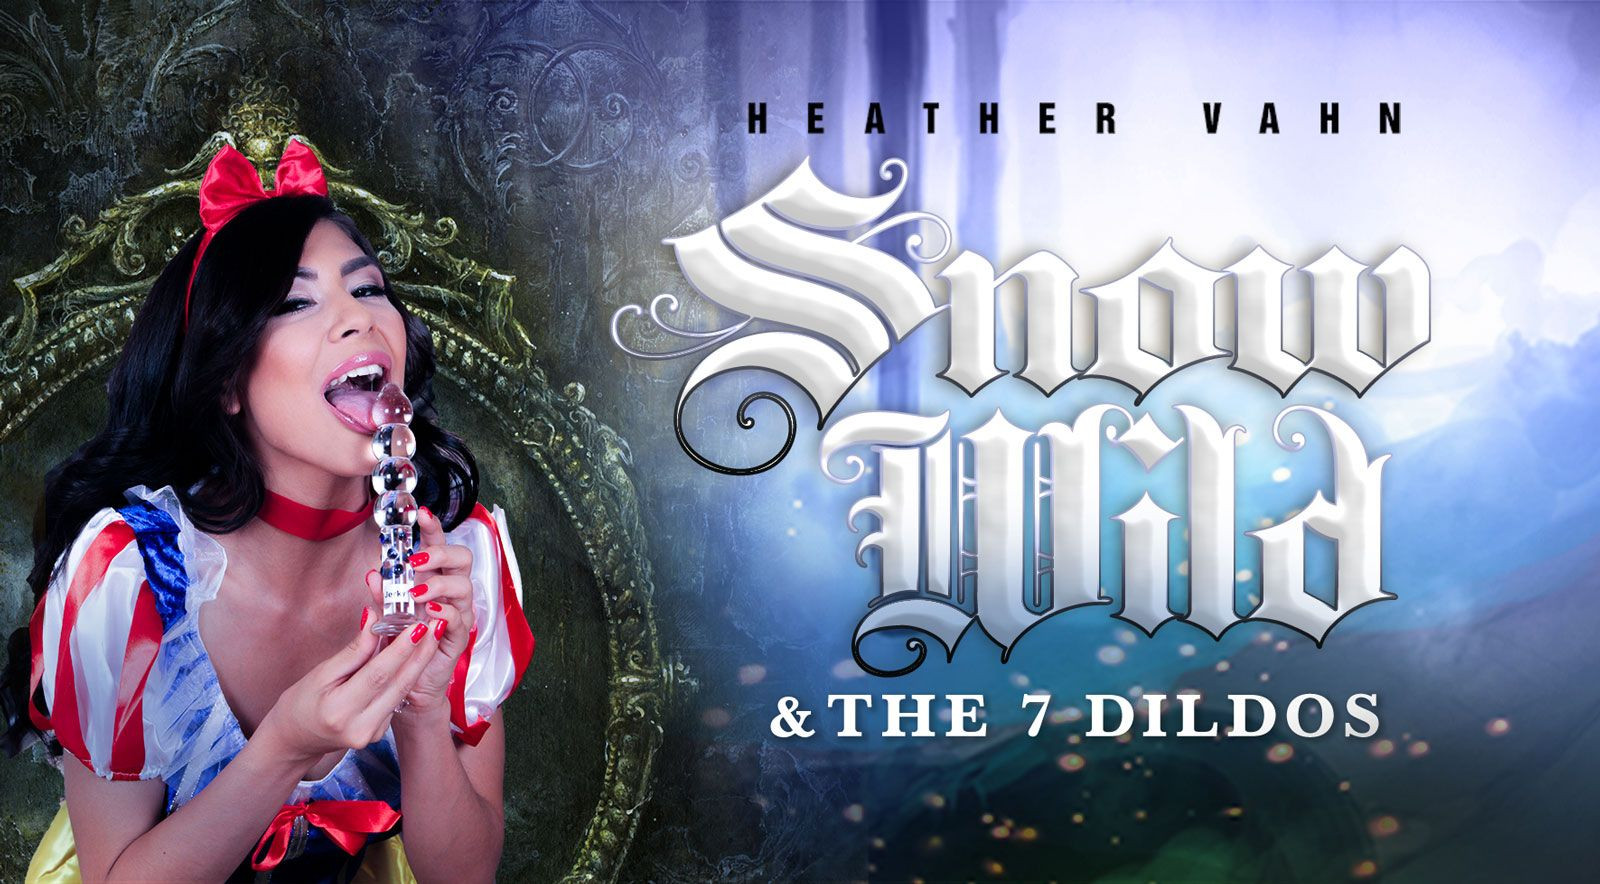 Snow Wild And The Seven Dildos: Heather Vahn Slideshow